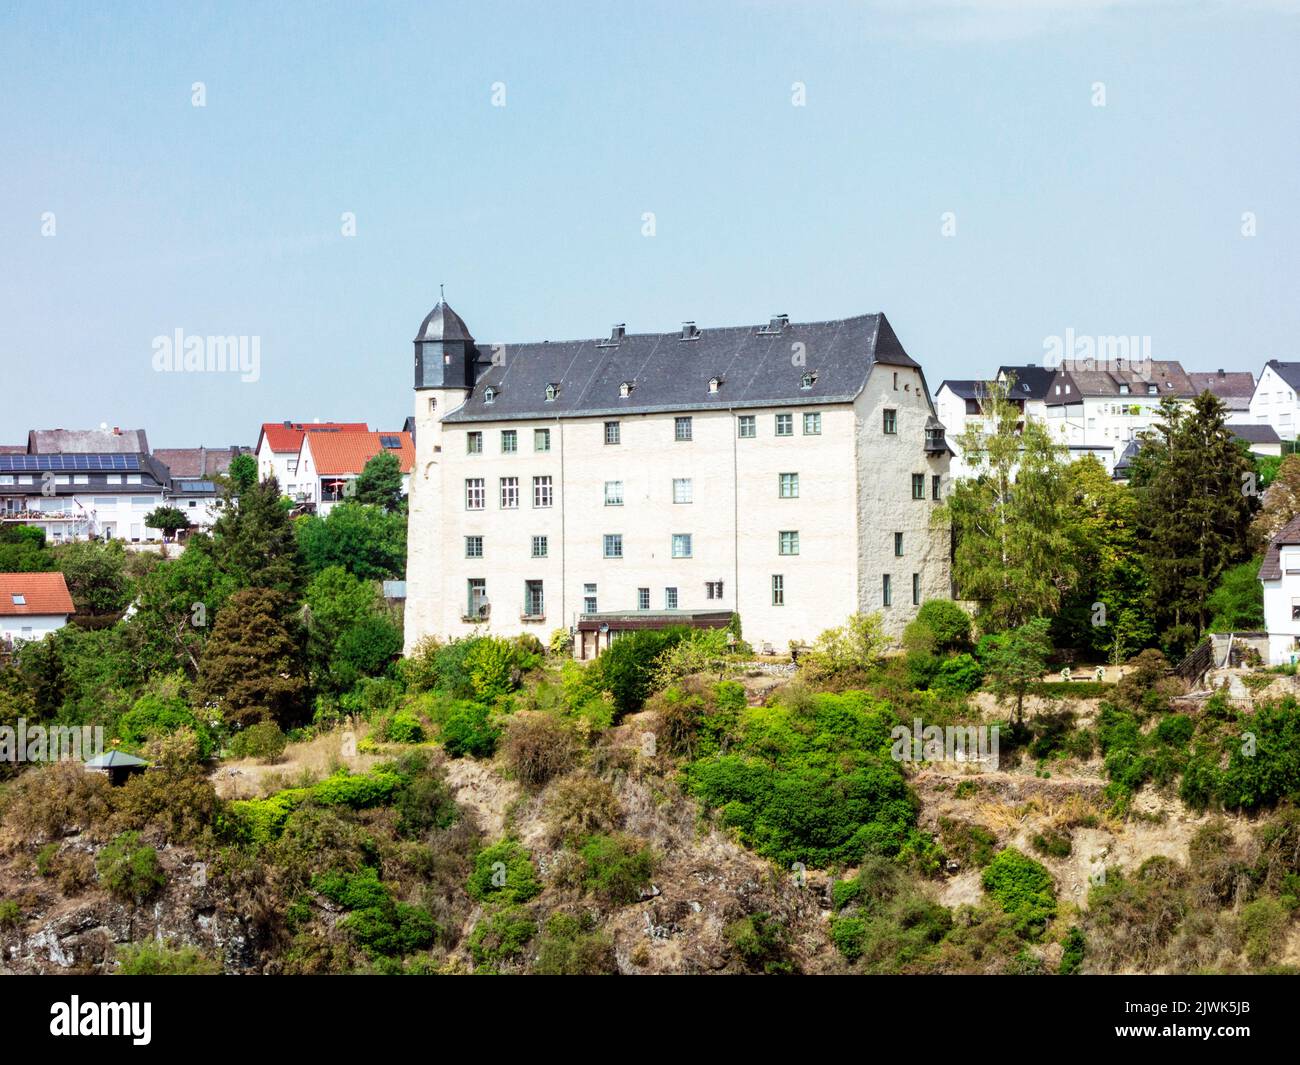 Schloss Schadeck in Runkel, Germany Stock Photo